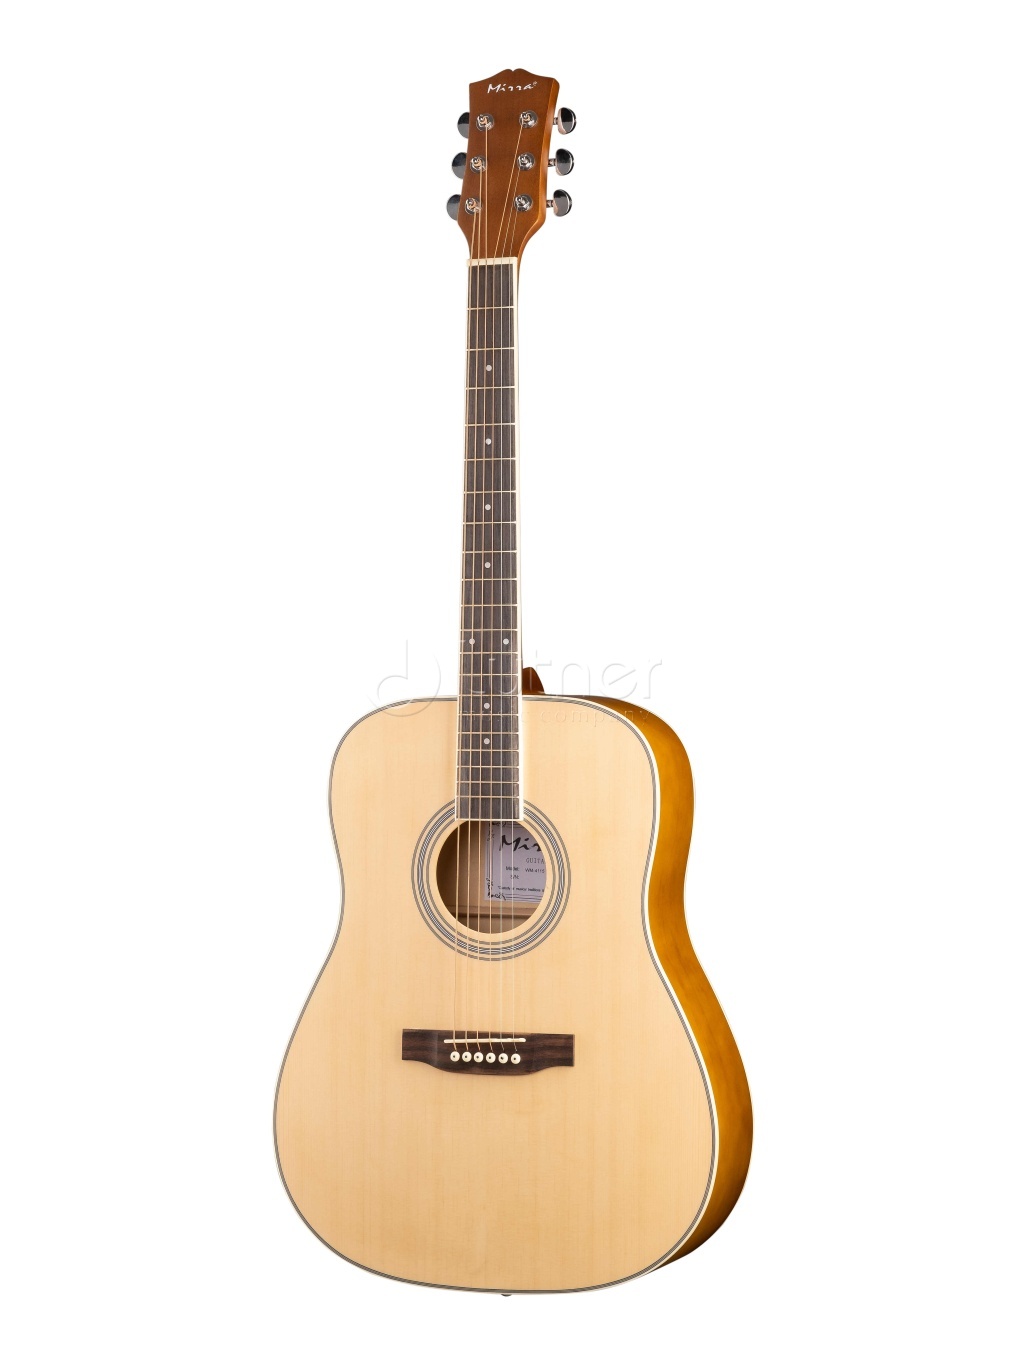 Акустические гитары Mirra WM-4115 акустические гитары flight d 200 3ts